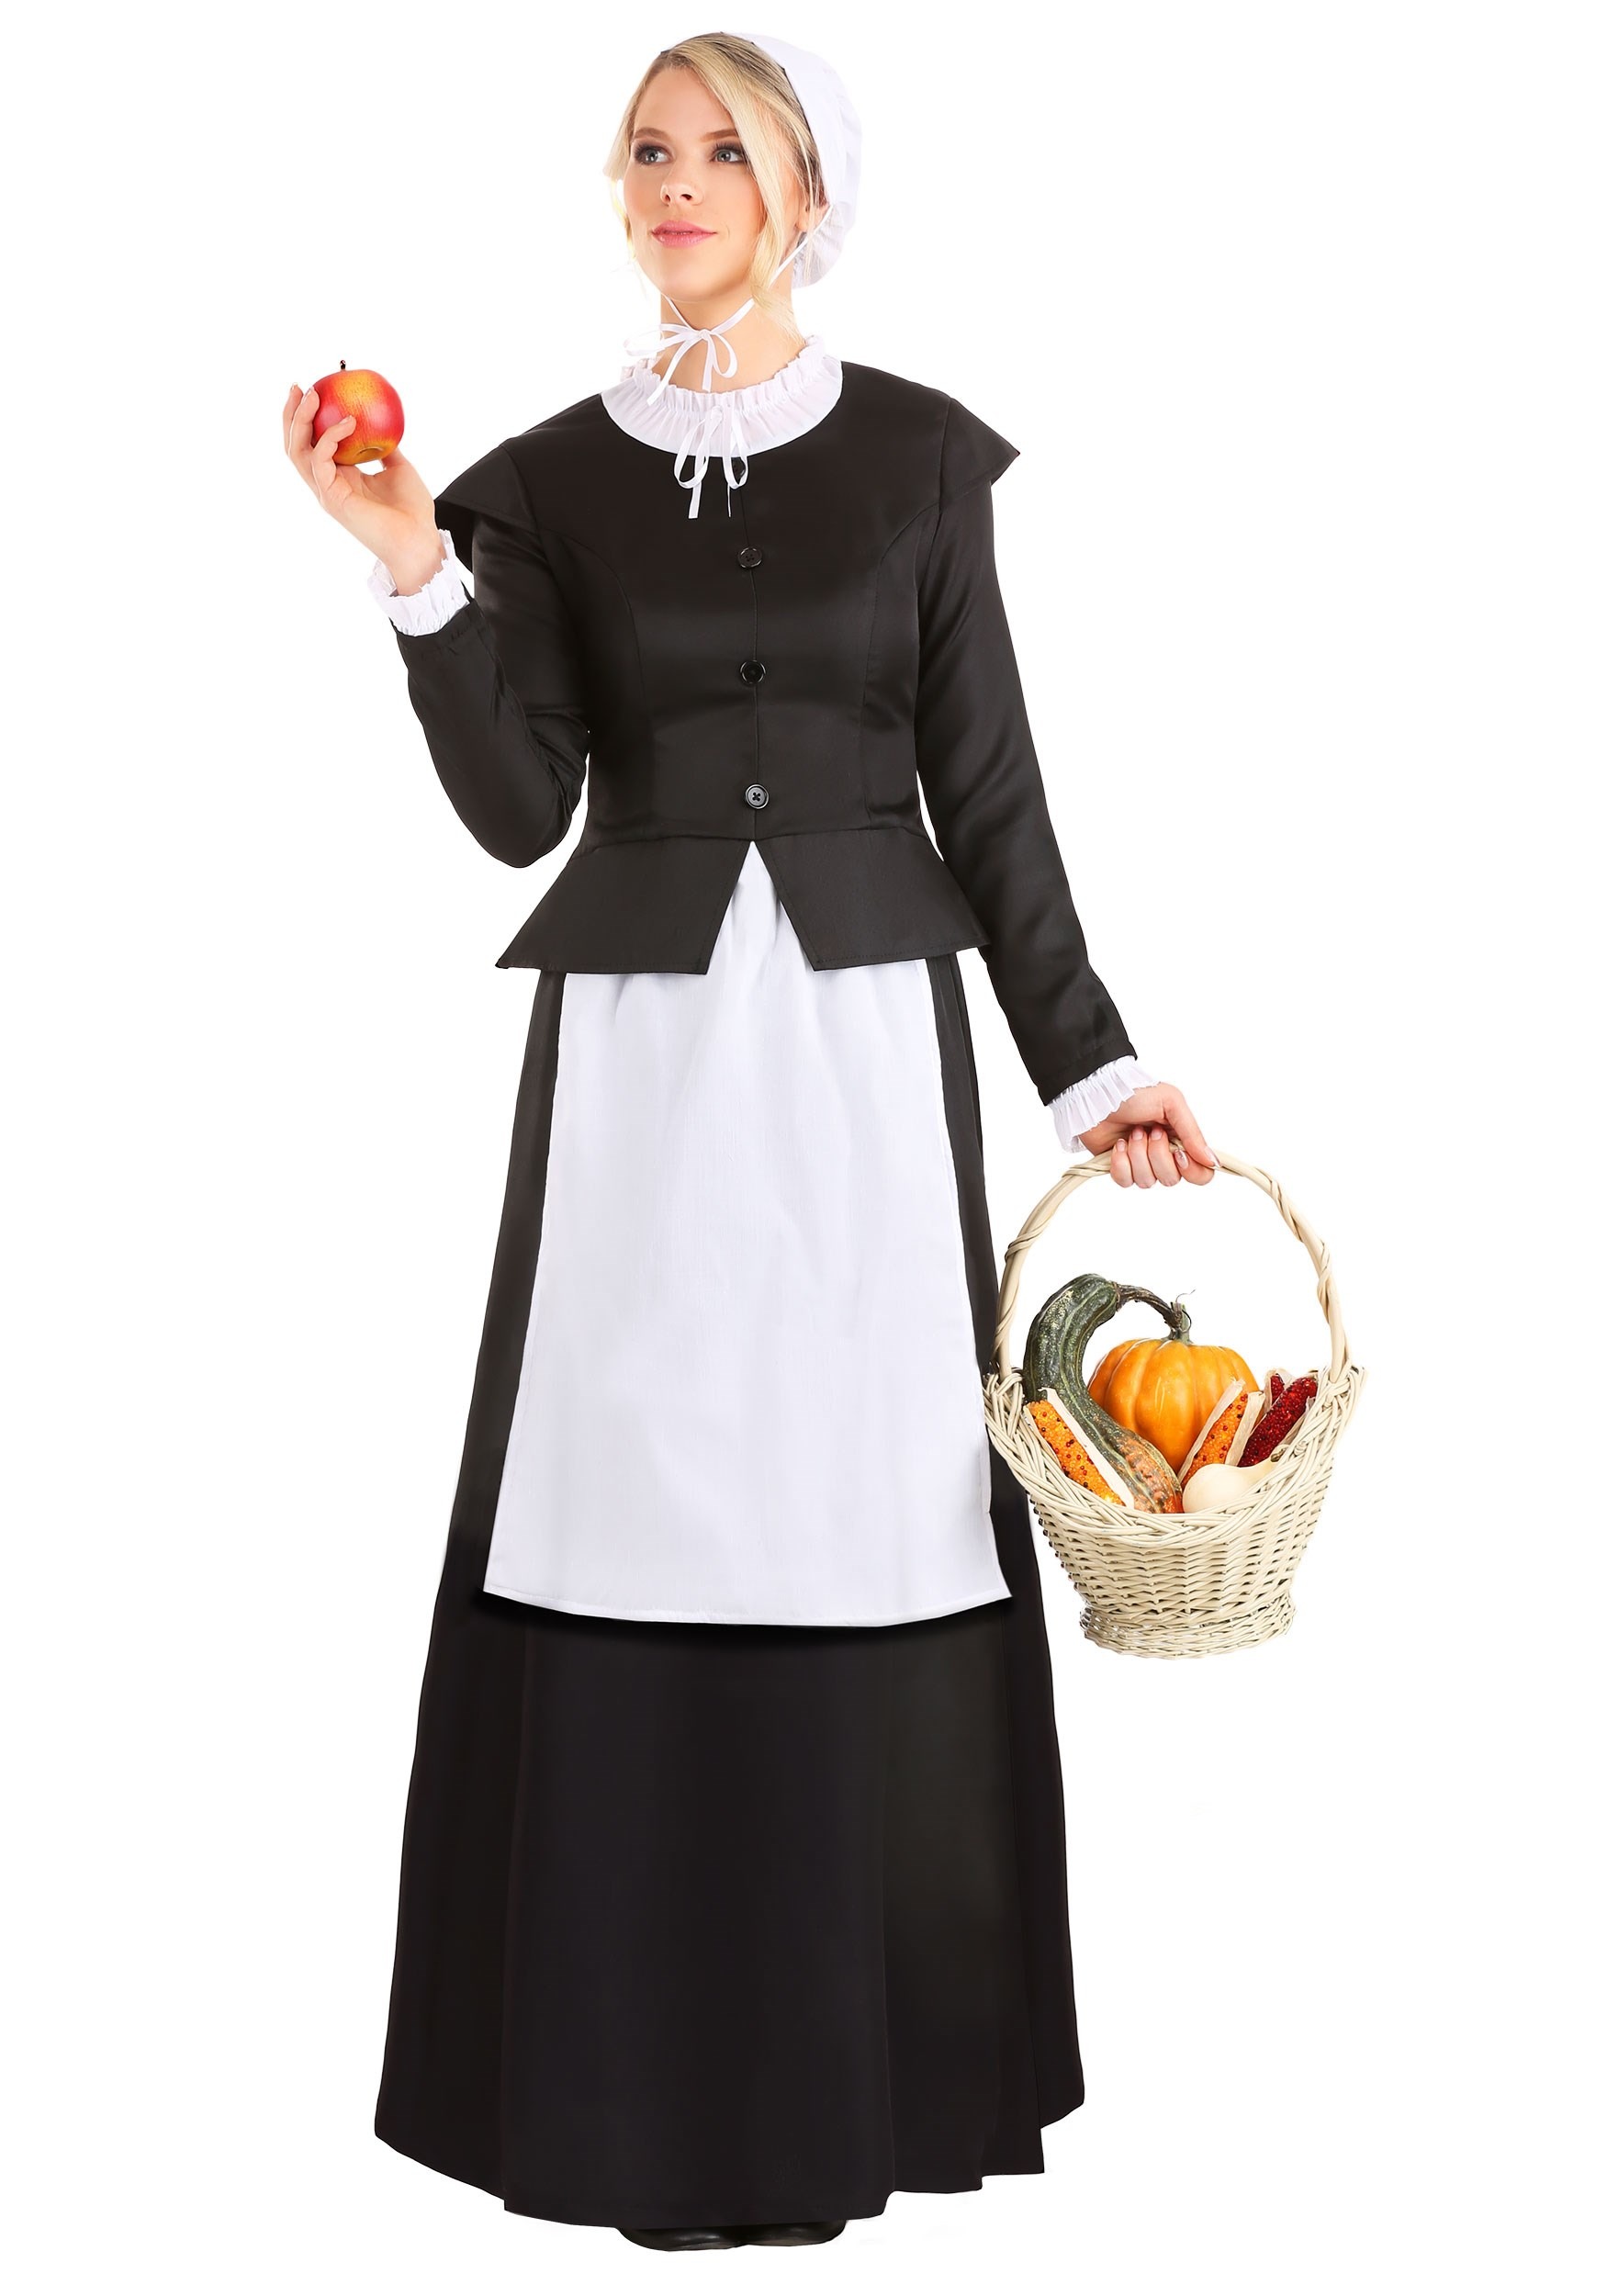 Sexy Pilgrim Costume